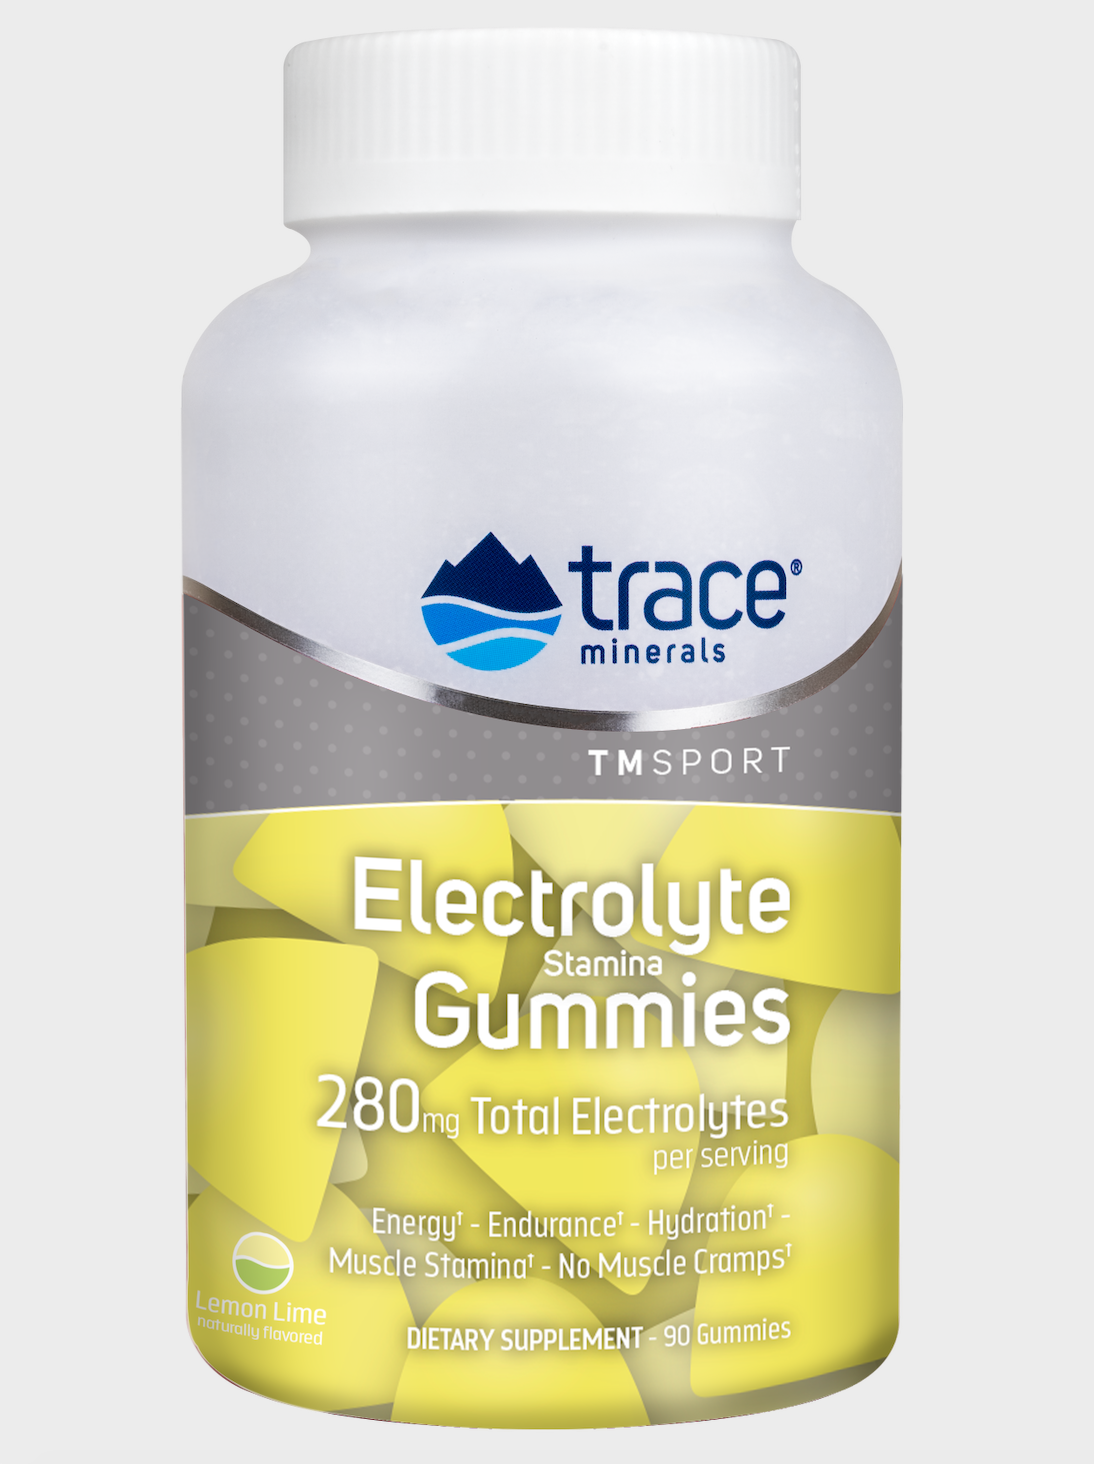 Electrolyte Gummies